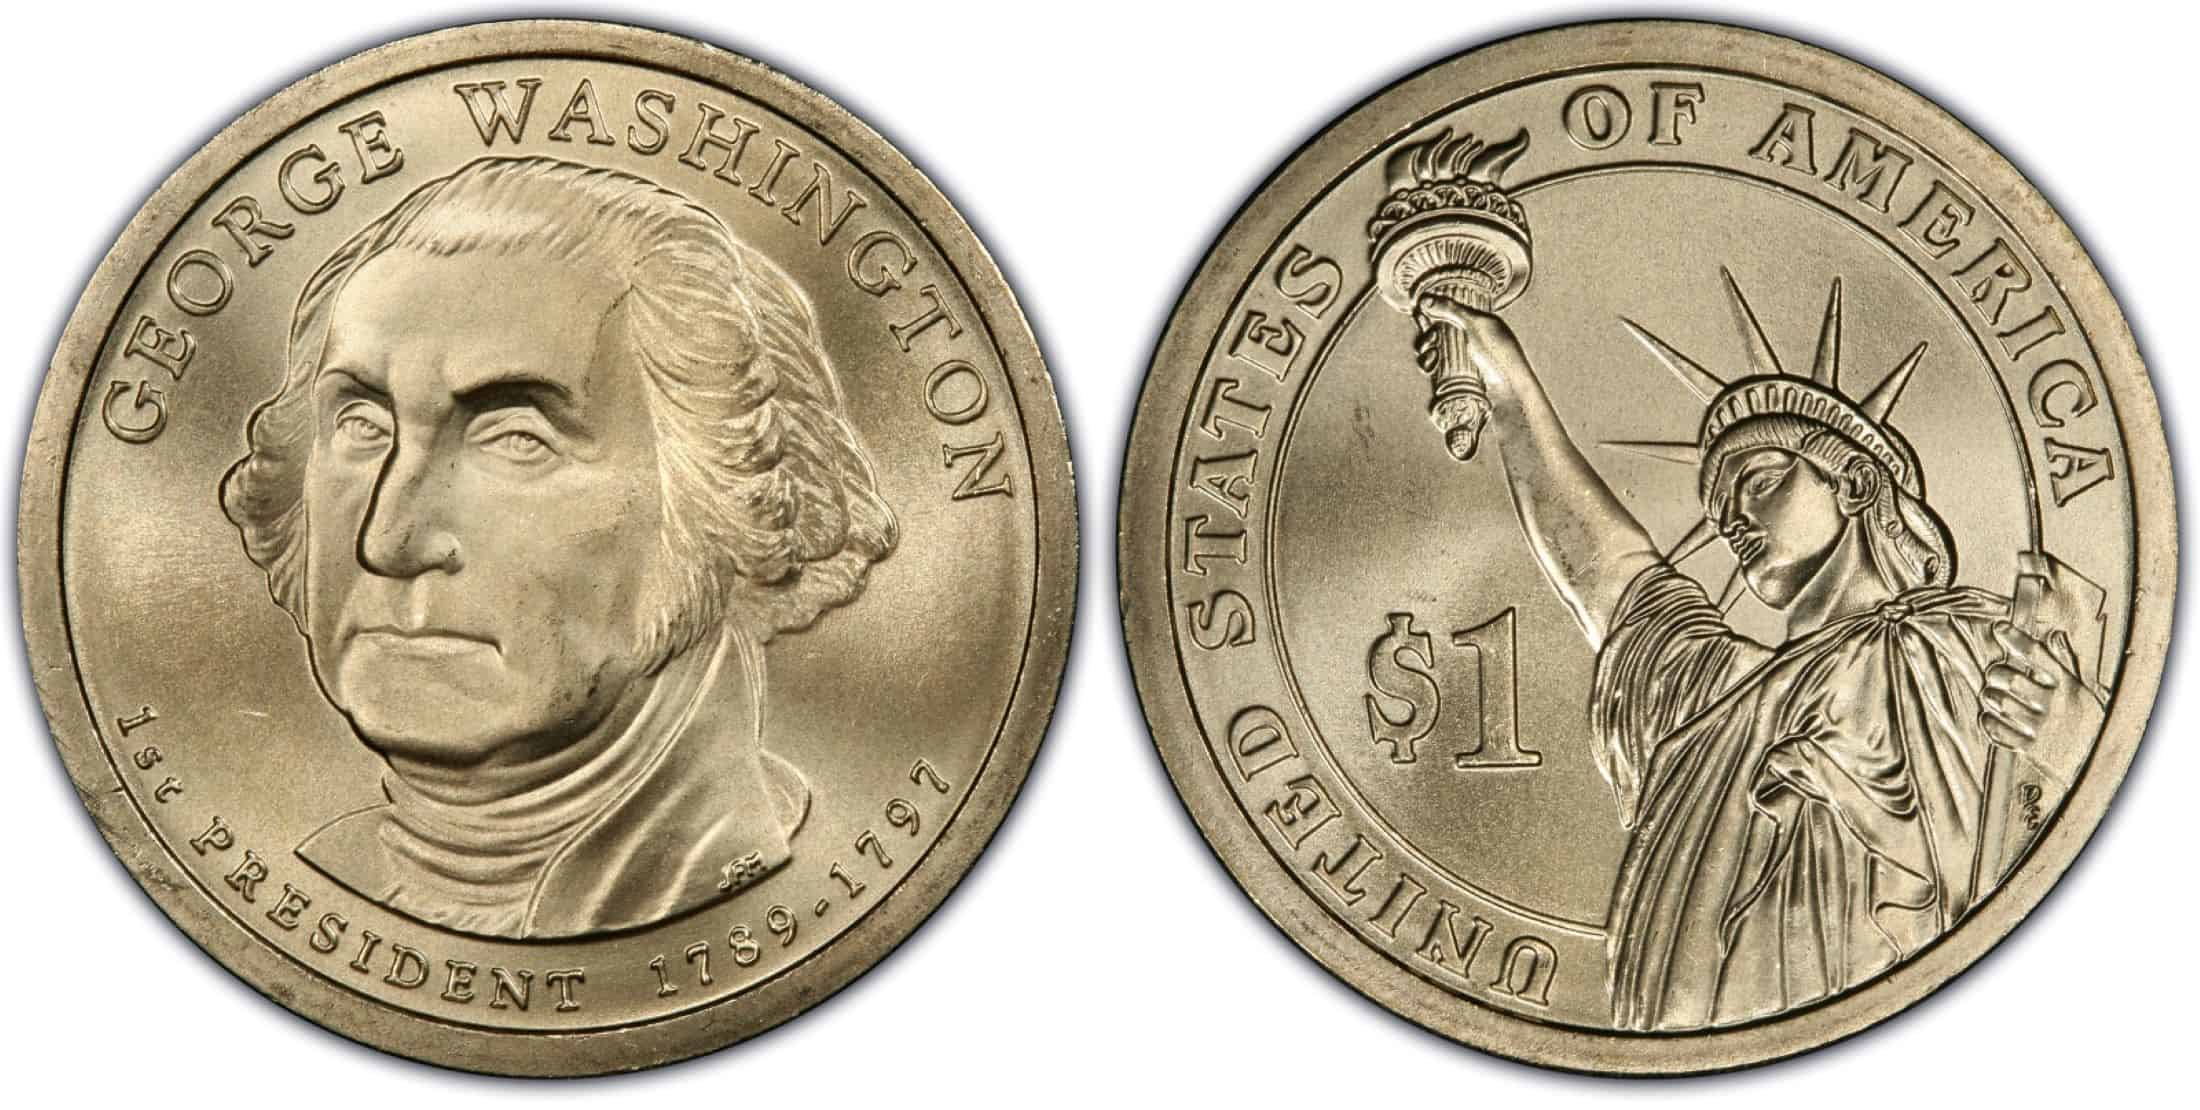 George Washington Dollar Coin No Edge Lettering Error